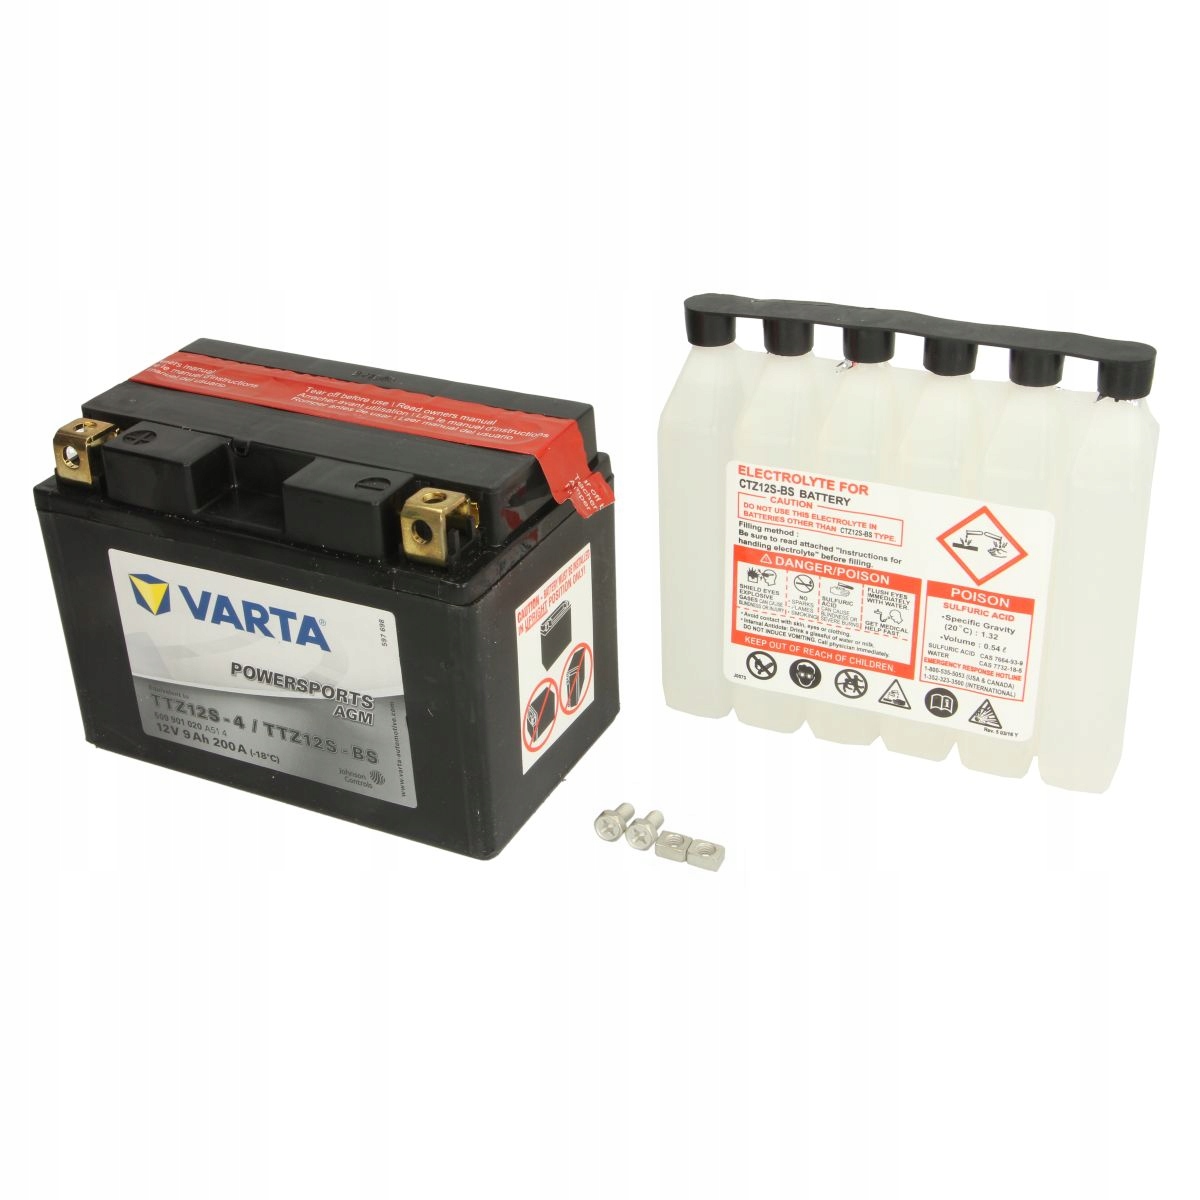 Batterie Moto VARTA YB18L-A 12V 18AH 200A